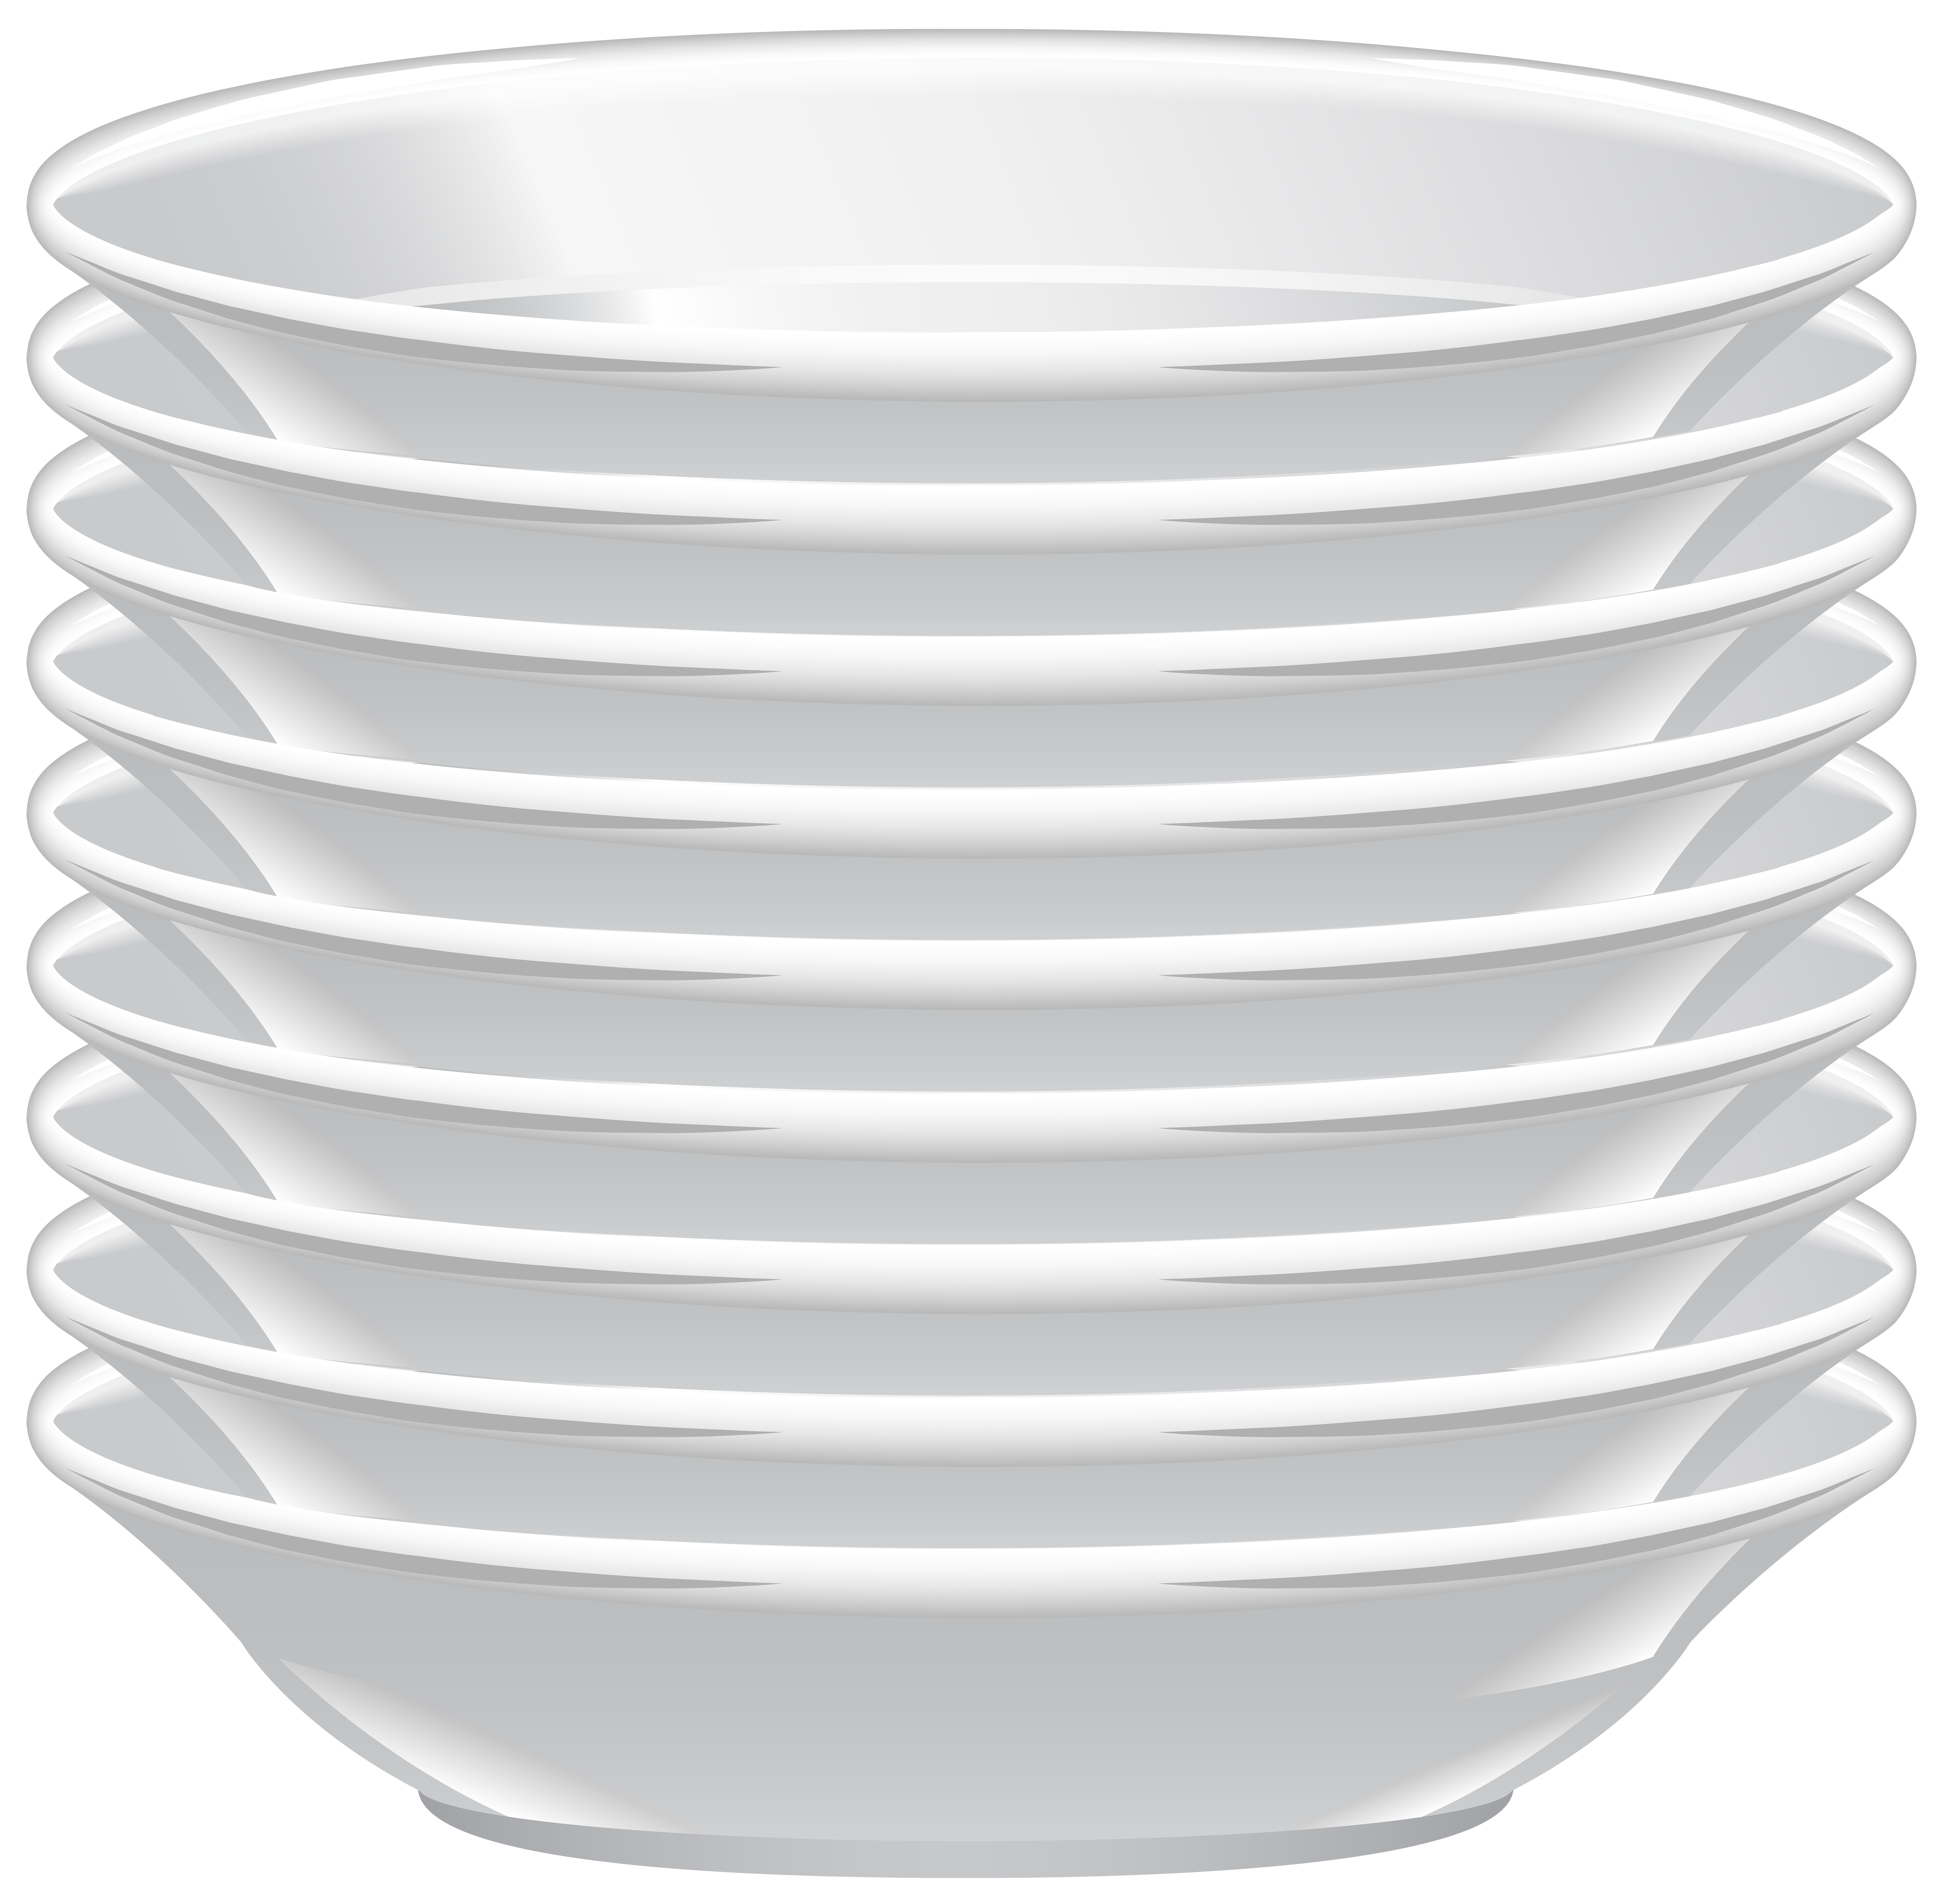 Plate dinnerware clipart - Clipground